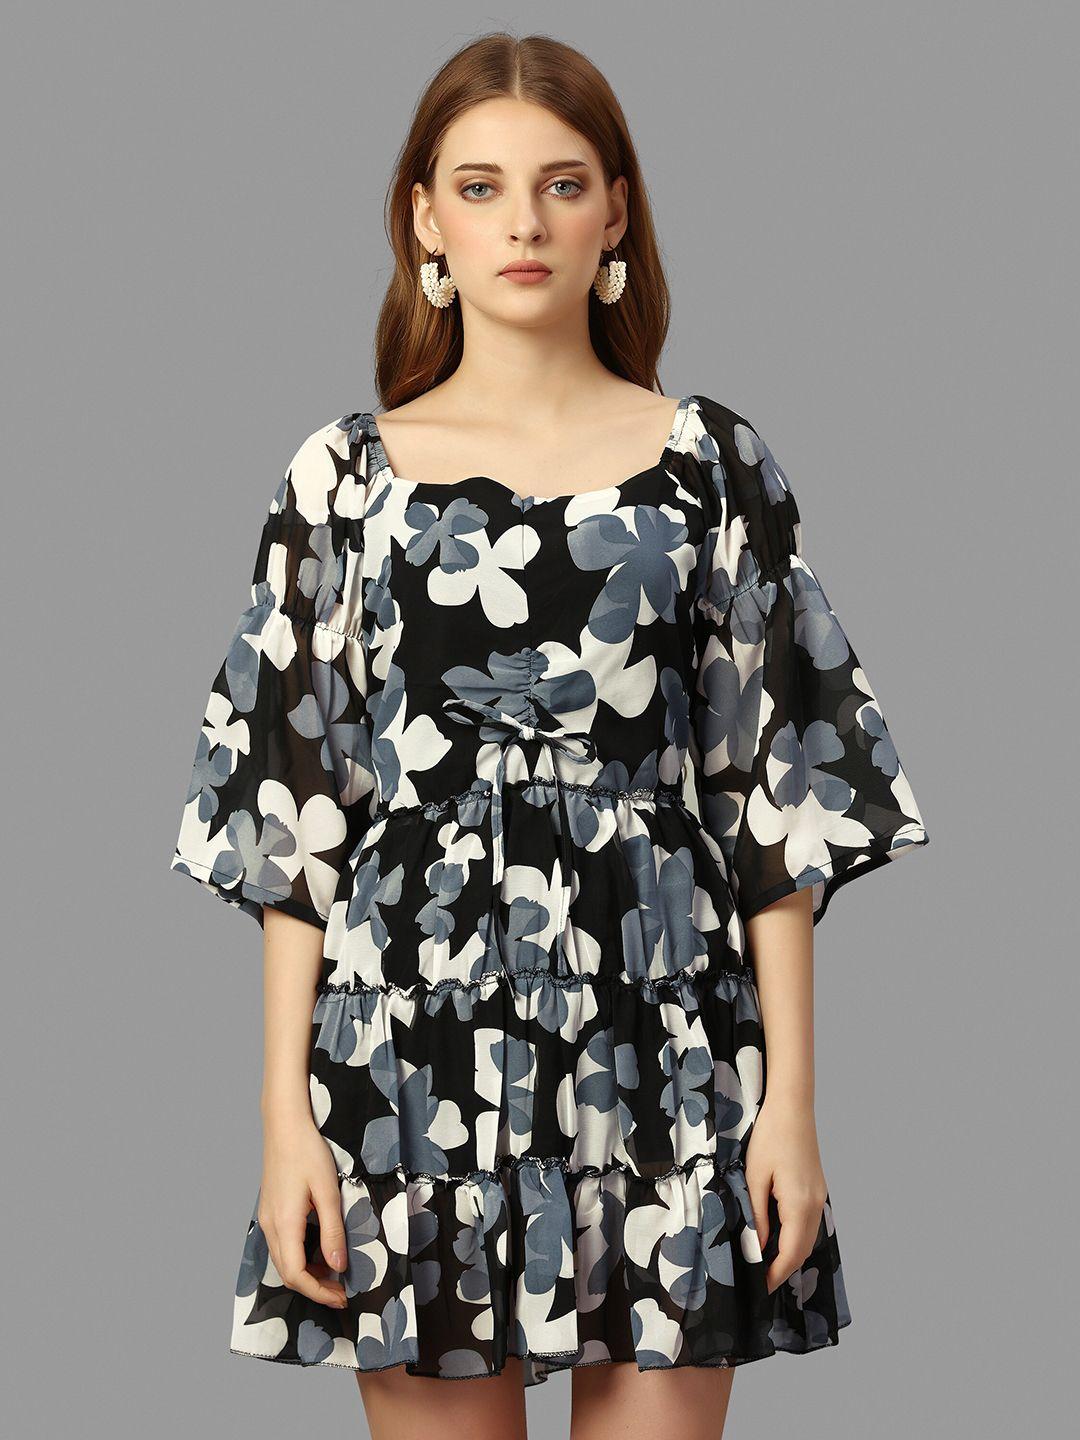 worivoc black floral print bell sleeve georgette fit & flare mini dress